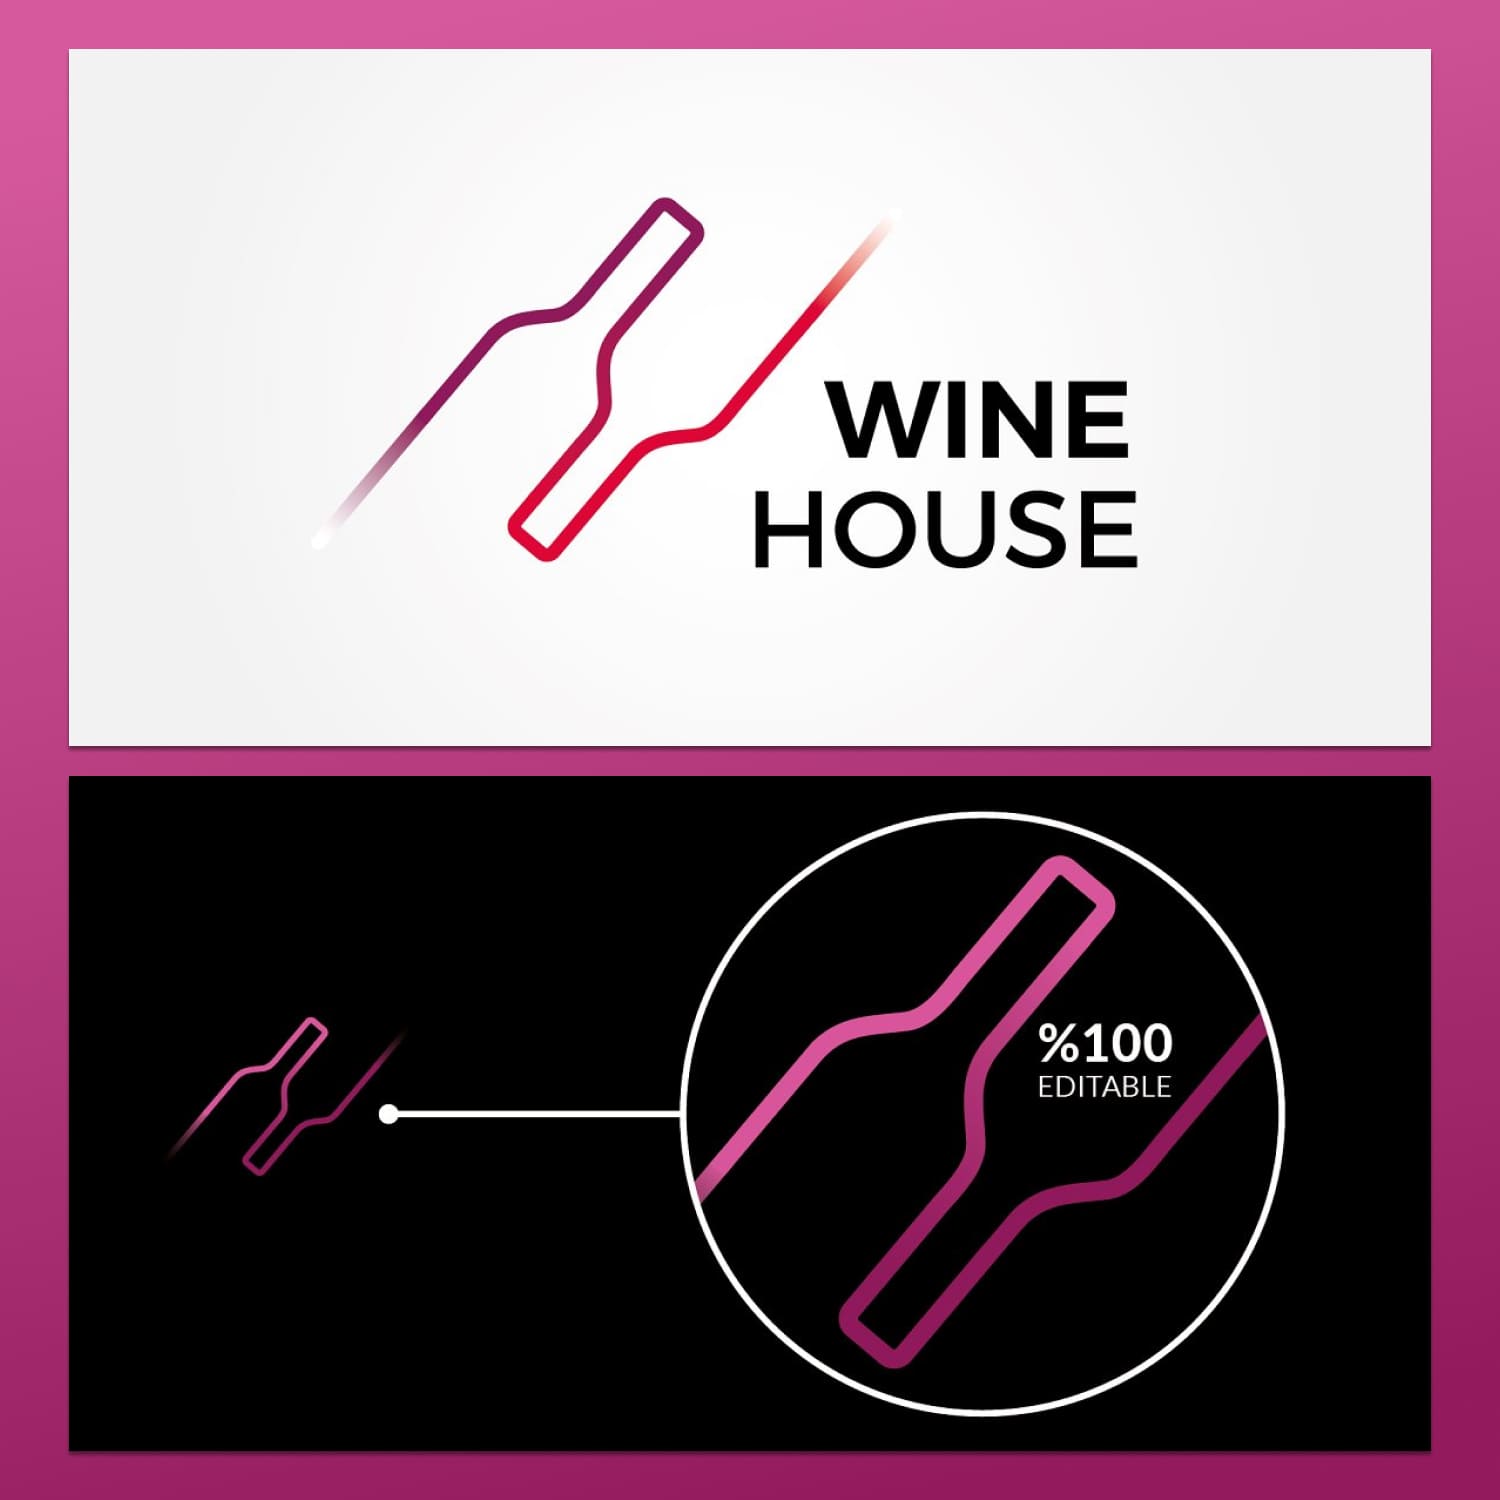 Wine House Logo is a minimalistic and modern logo.